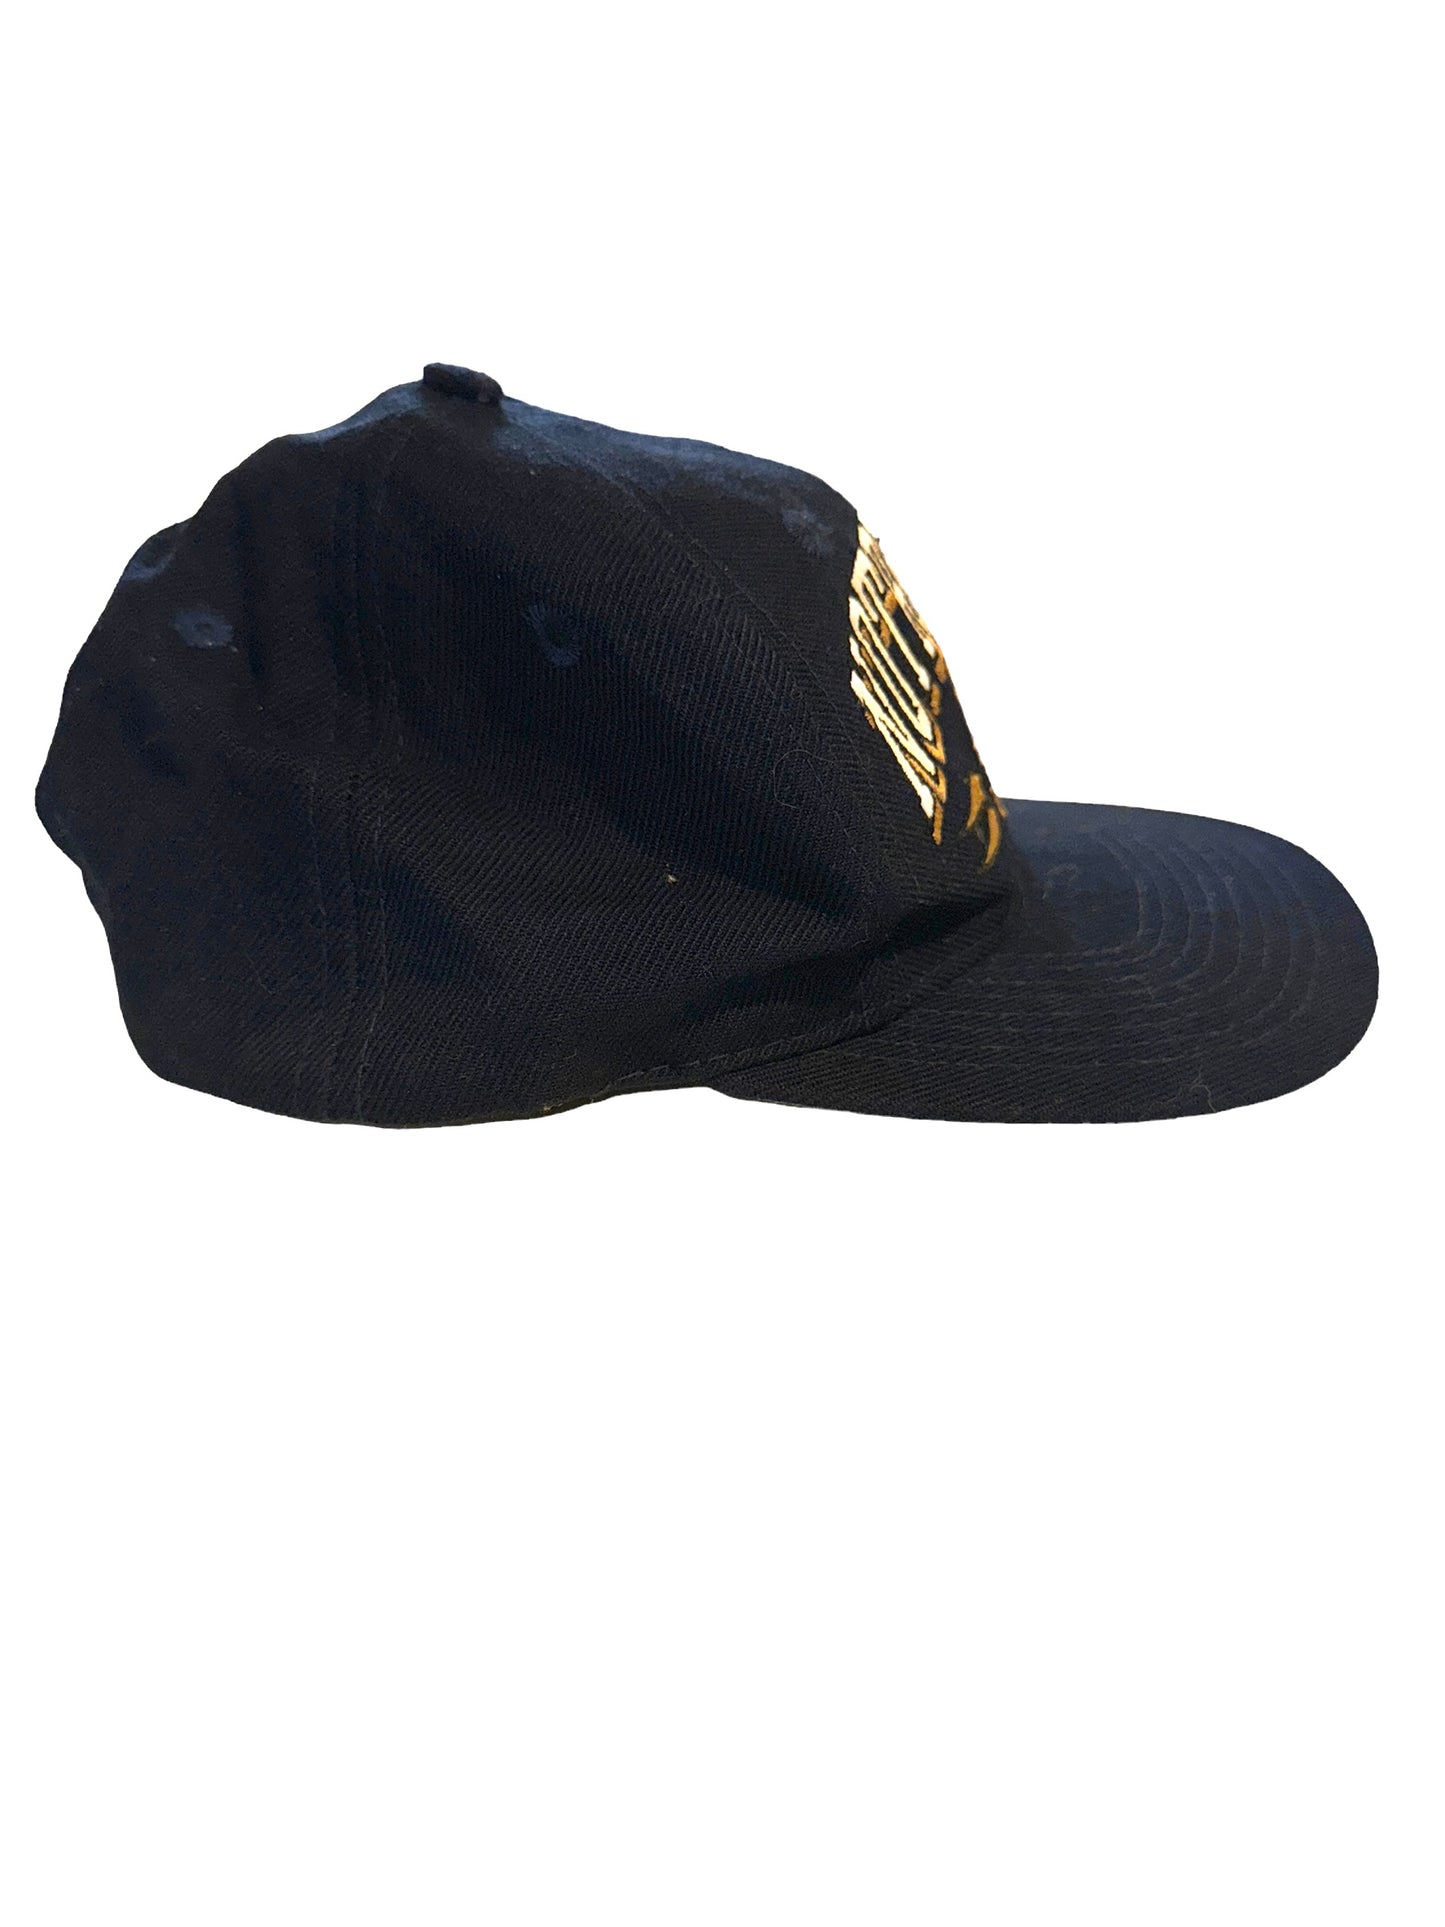 Vintage Notre Dame Diamonds Hat by Logo Athletic